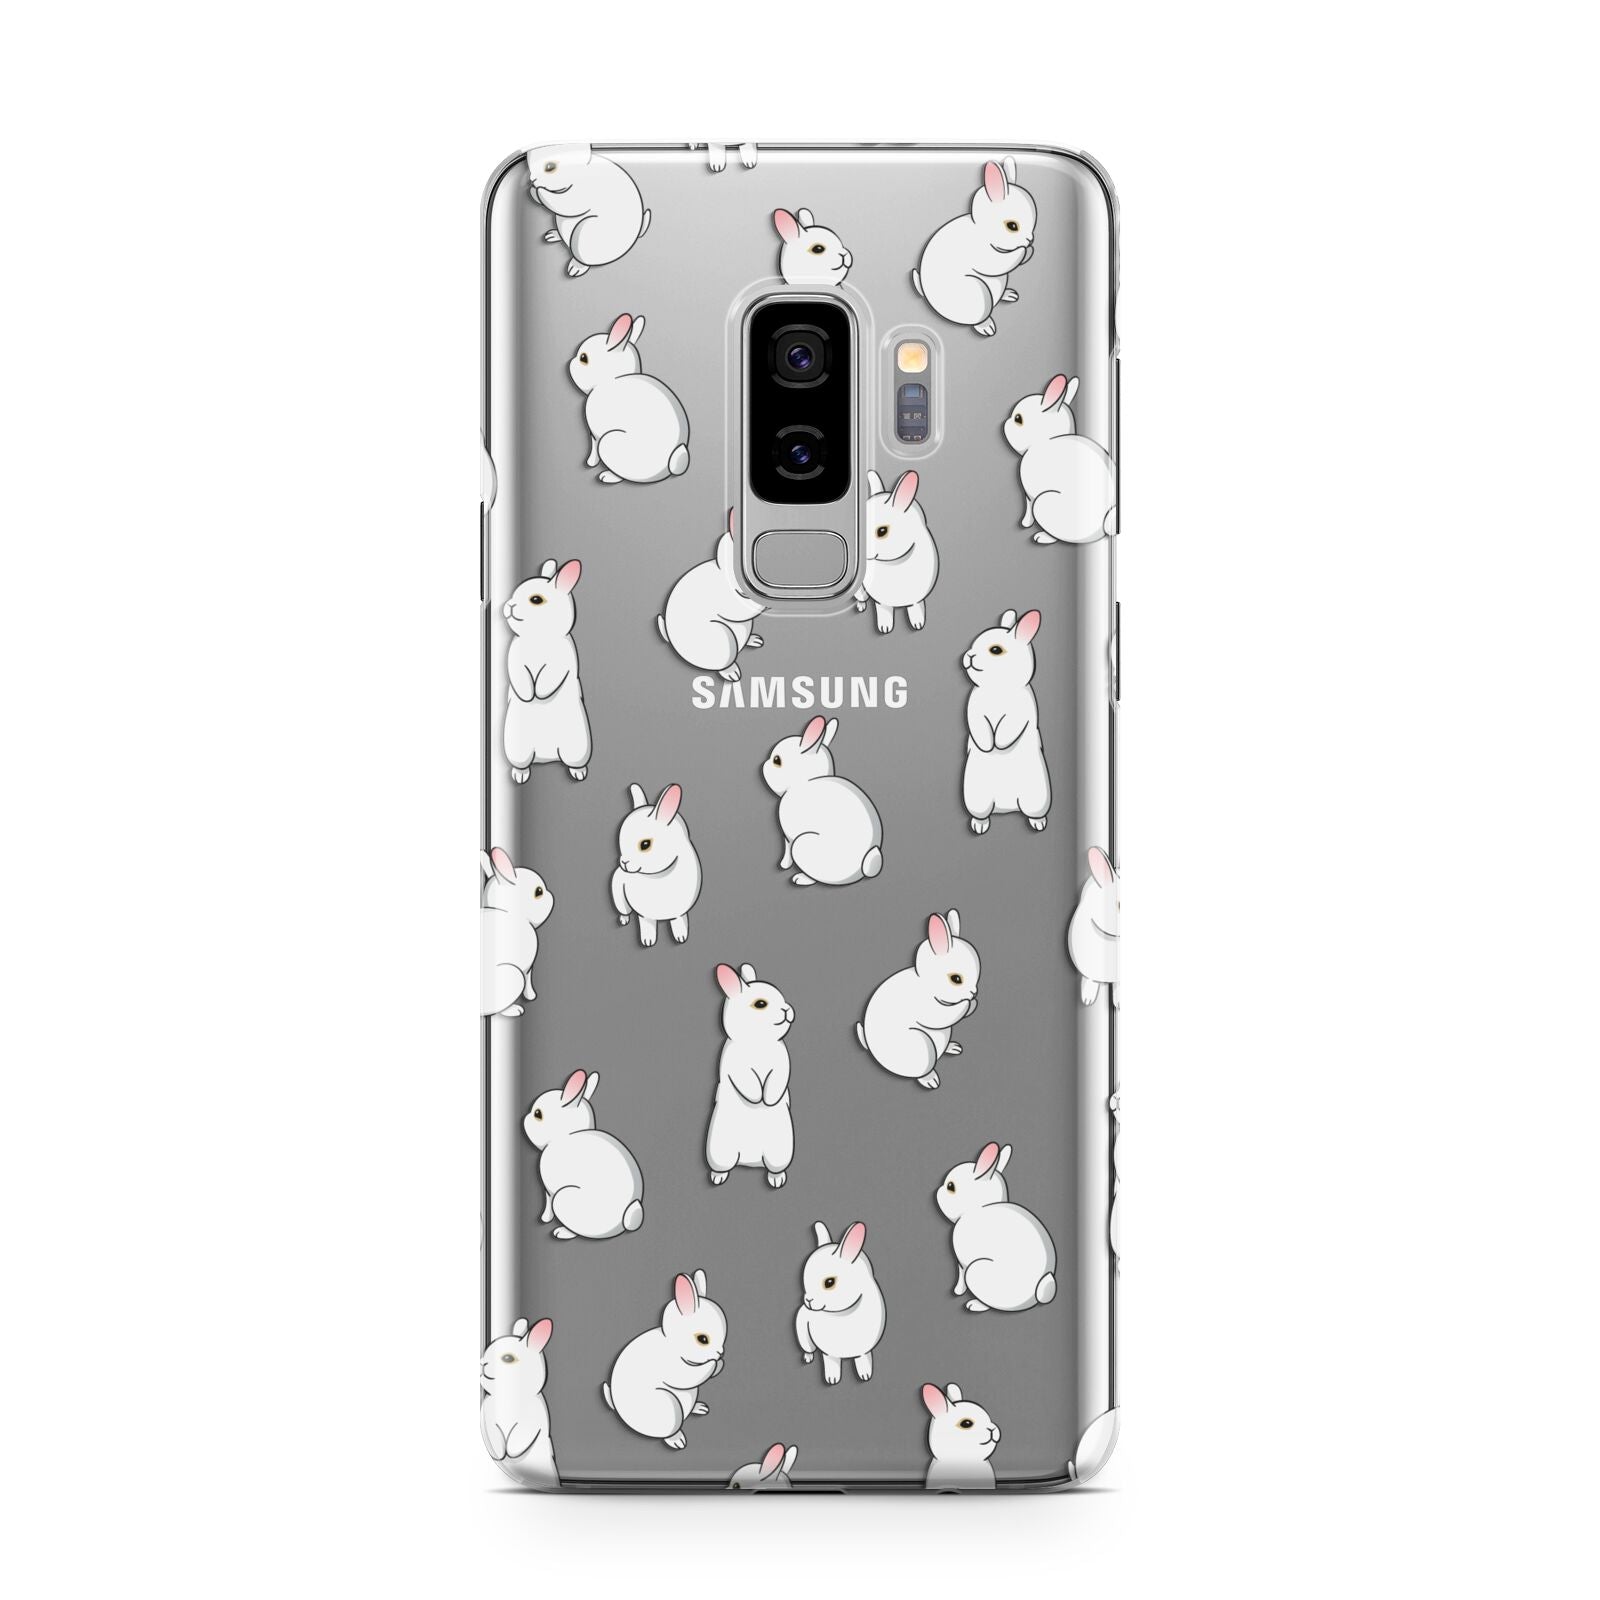 Bunny Rabbit Samsung Galaxy S9 Plus Case on Silver phone